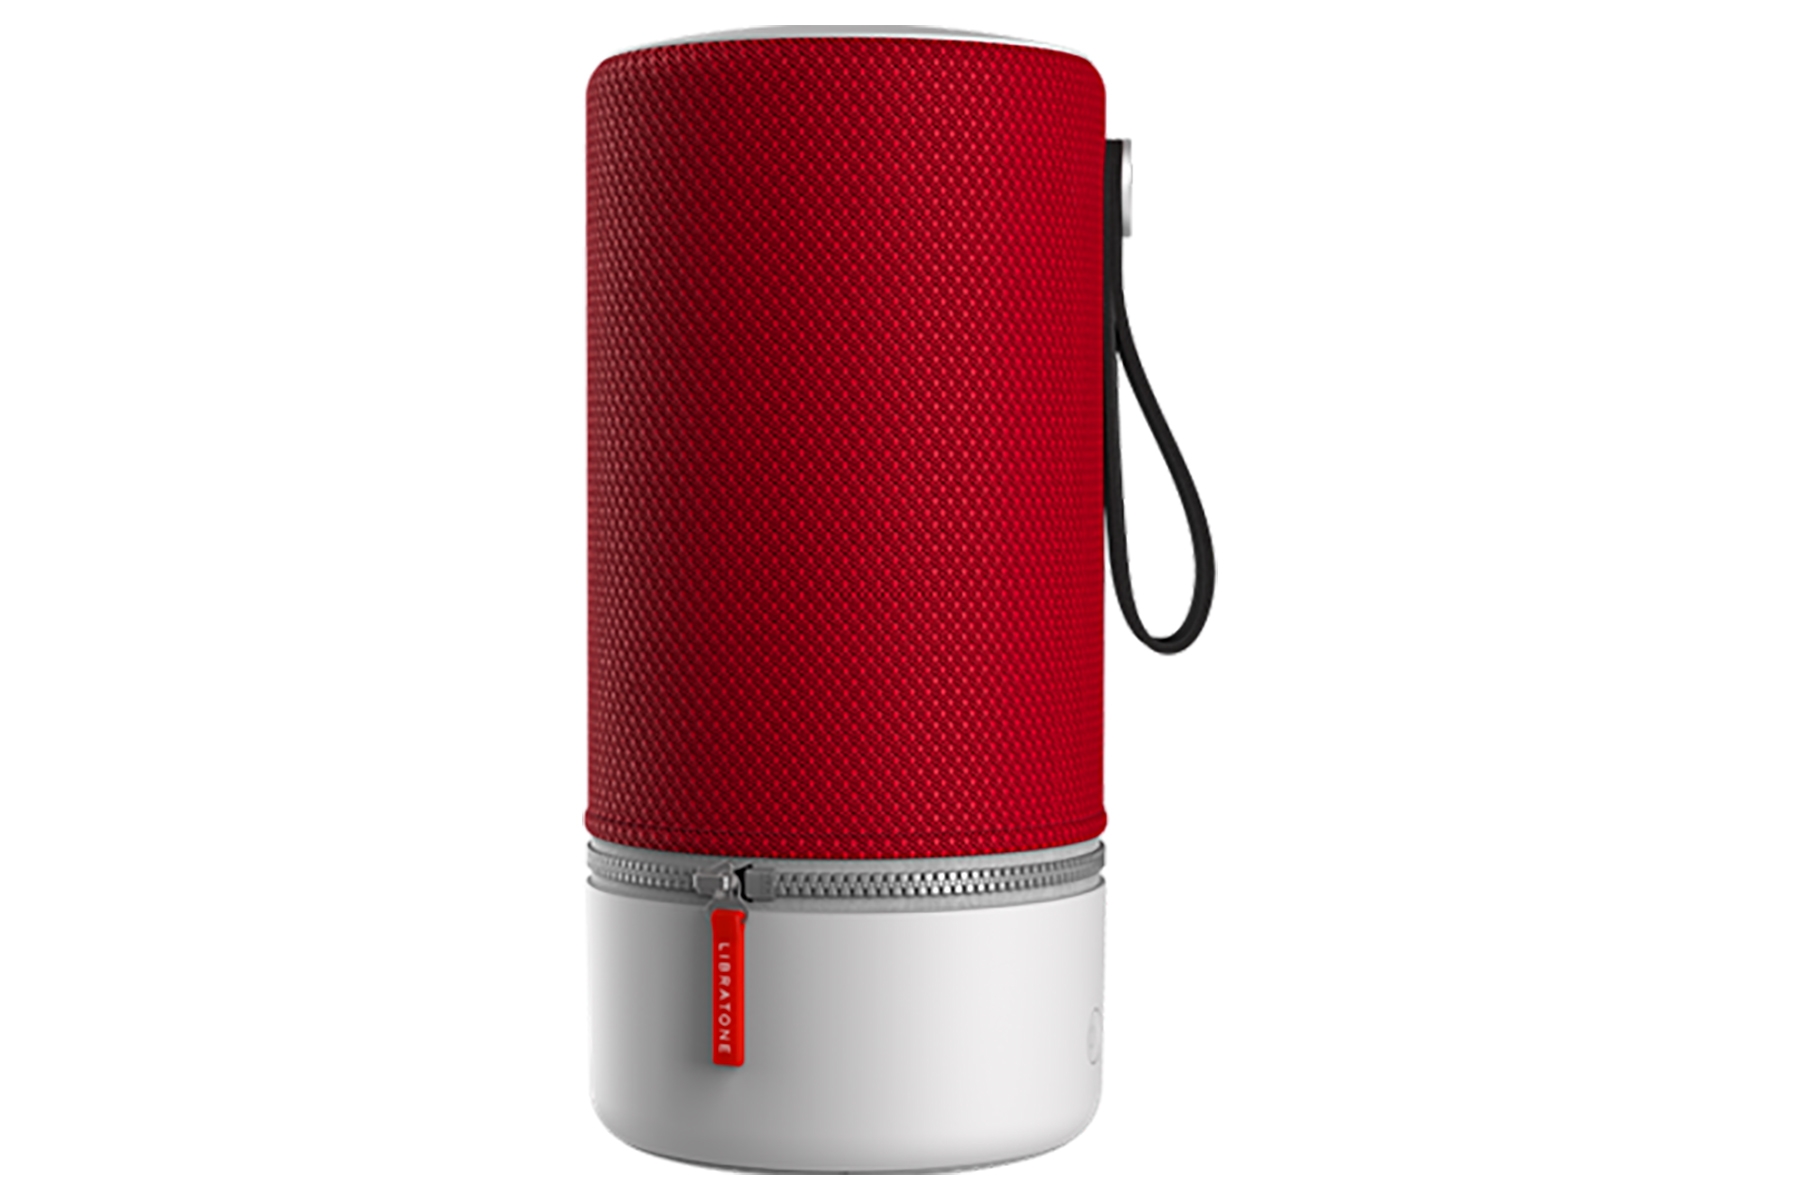 Libratone's new portable Zipp speakers come with Alexa | DeviceDaily.com